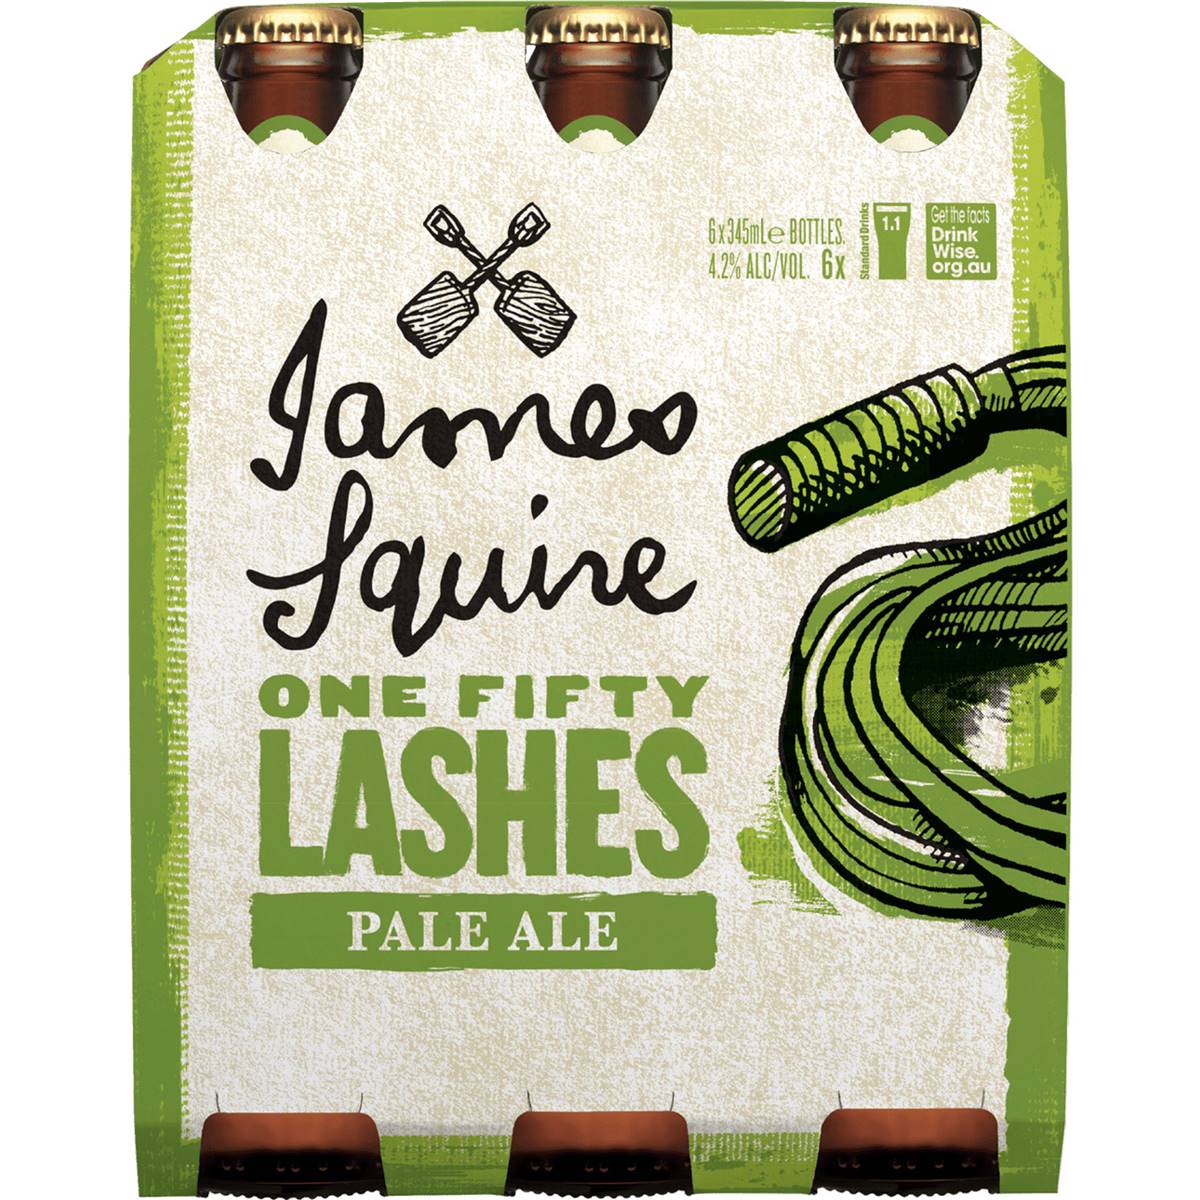 Calories in James Squire 150 Lashes Pale Ale Bottle